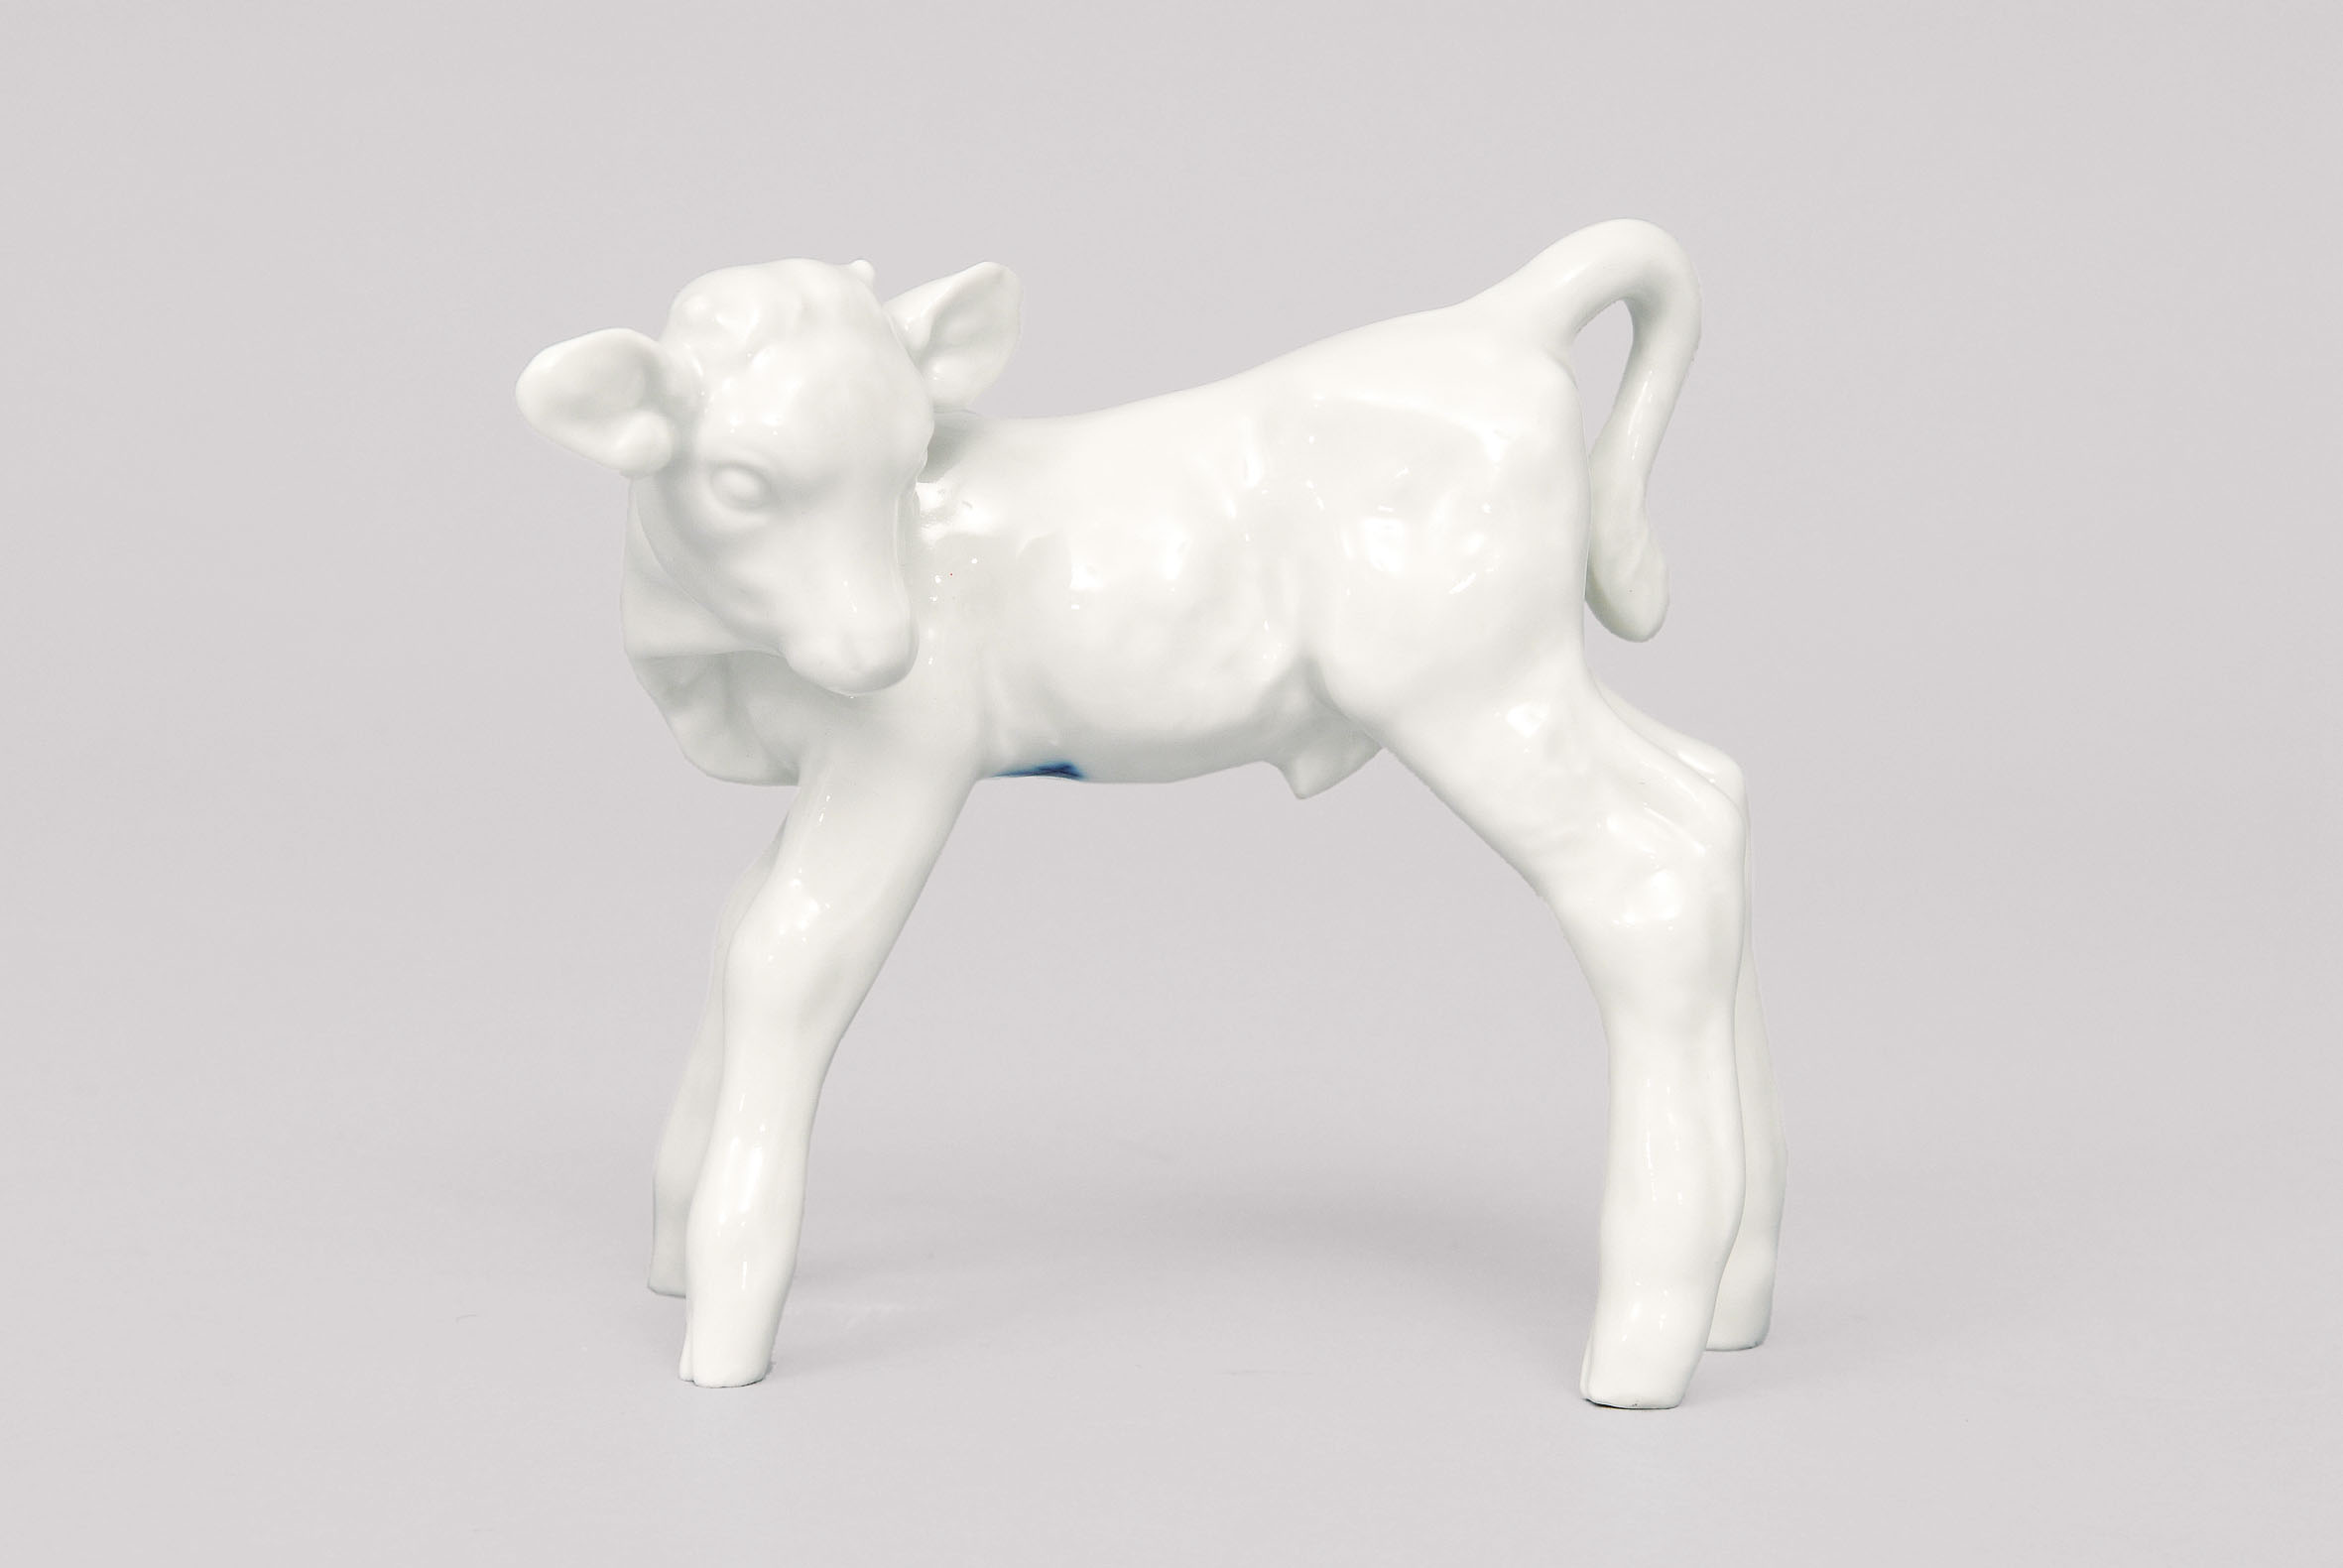 A small calf figurine